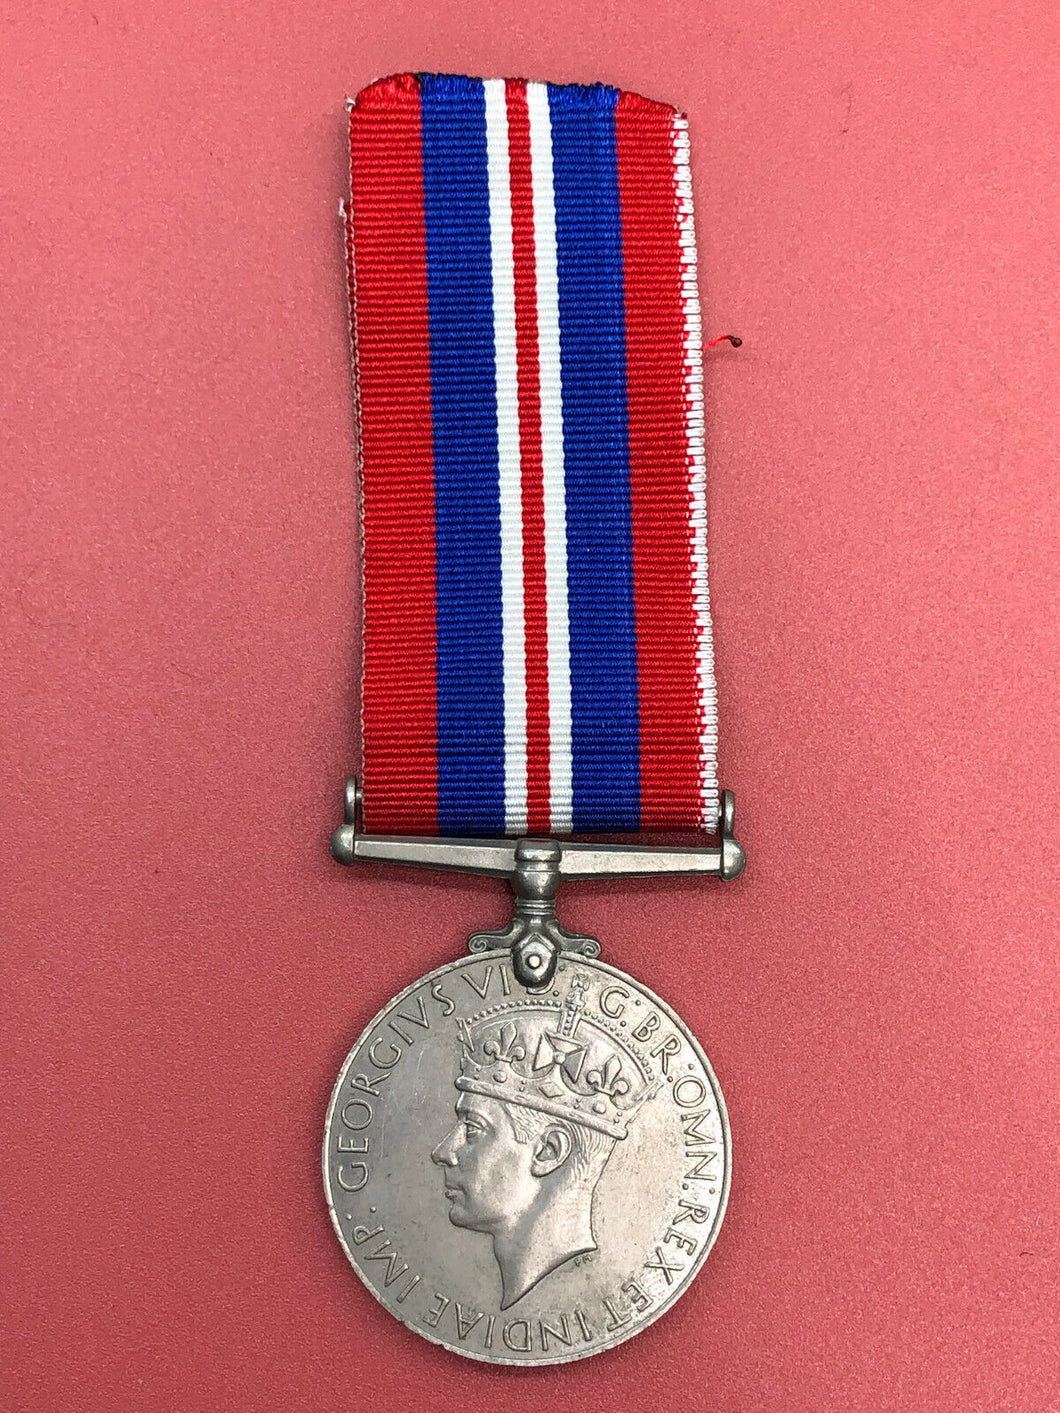 Original WW2 British Army Soldiers War Medal - 1939-1945